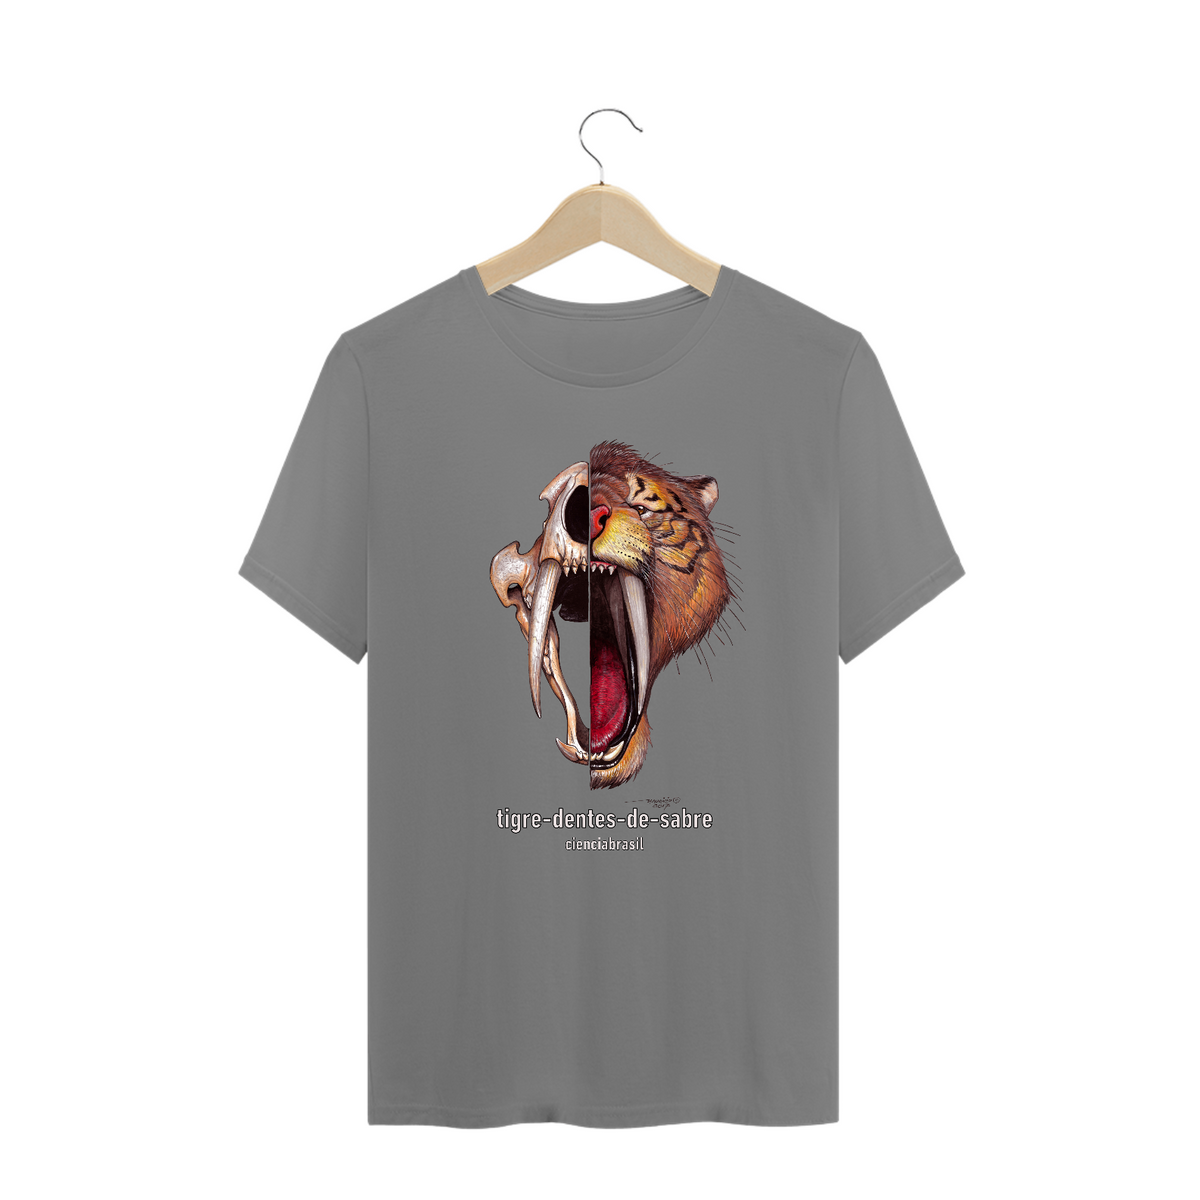 Nome do produto: T-Shirt Plus Size caras Tigre-dentes-de-sabre